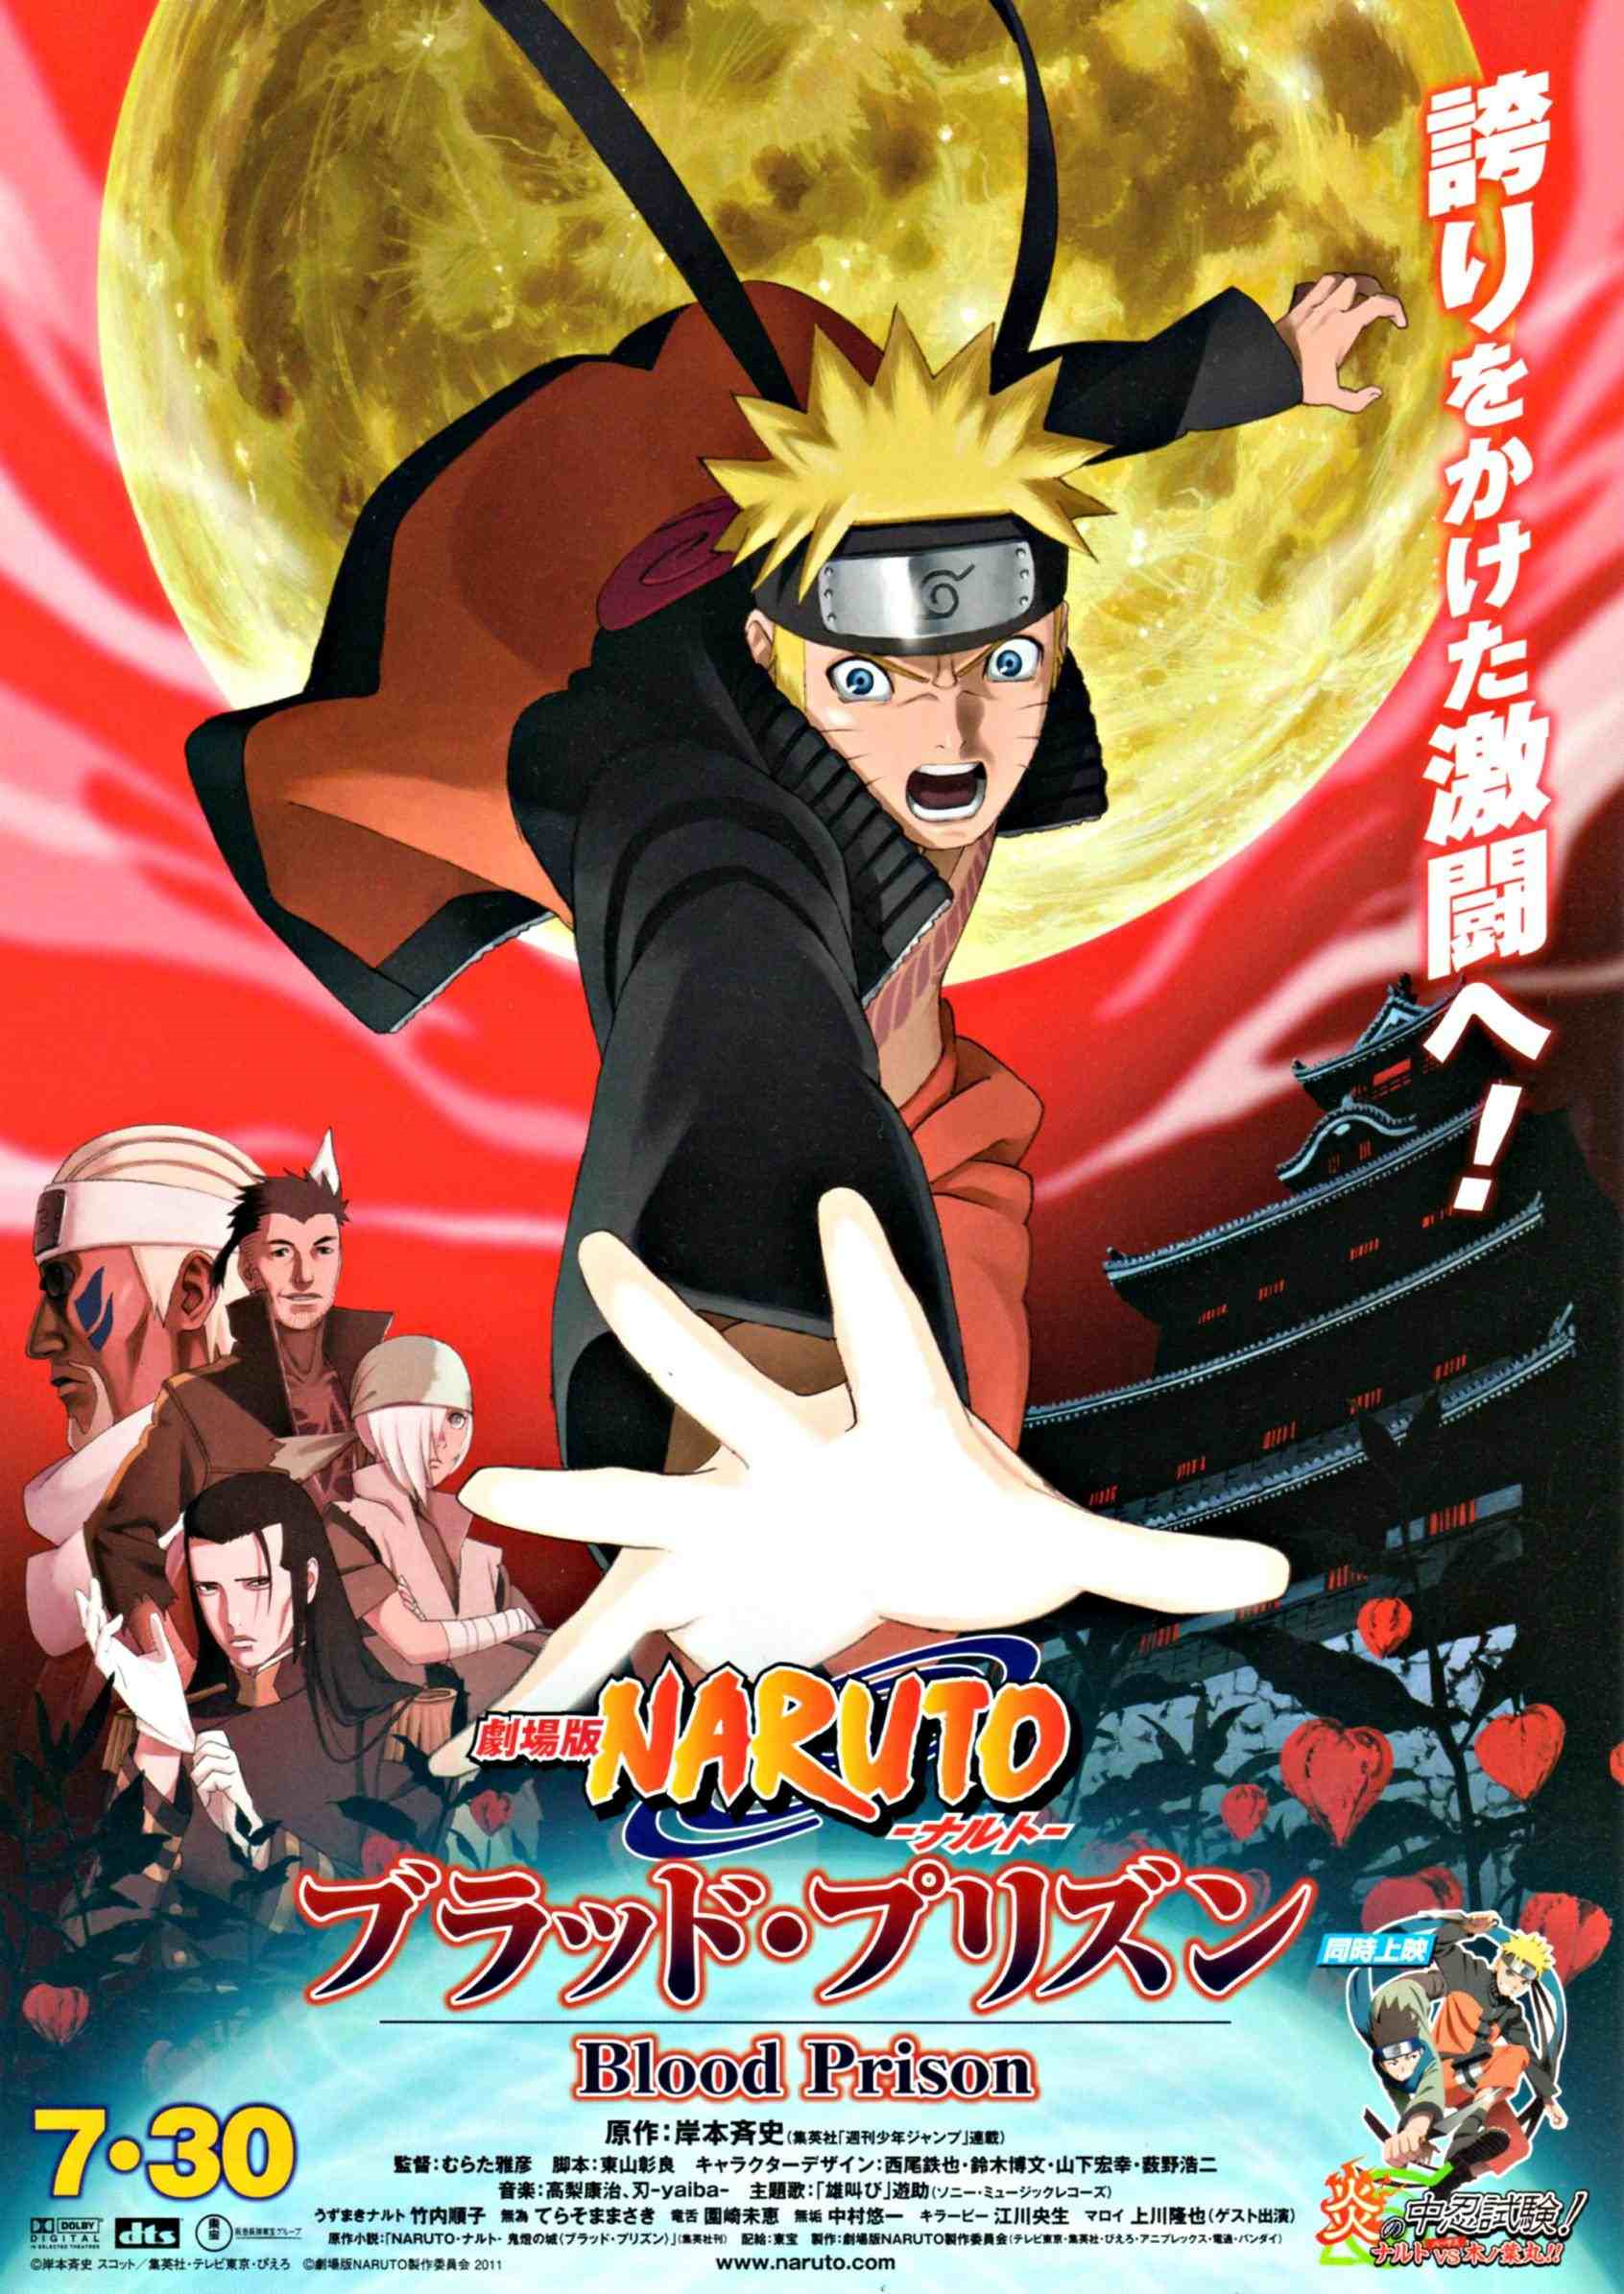 Gekijōban Naruto Shippūden: The Lost Tower (Novel)